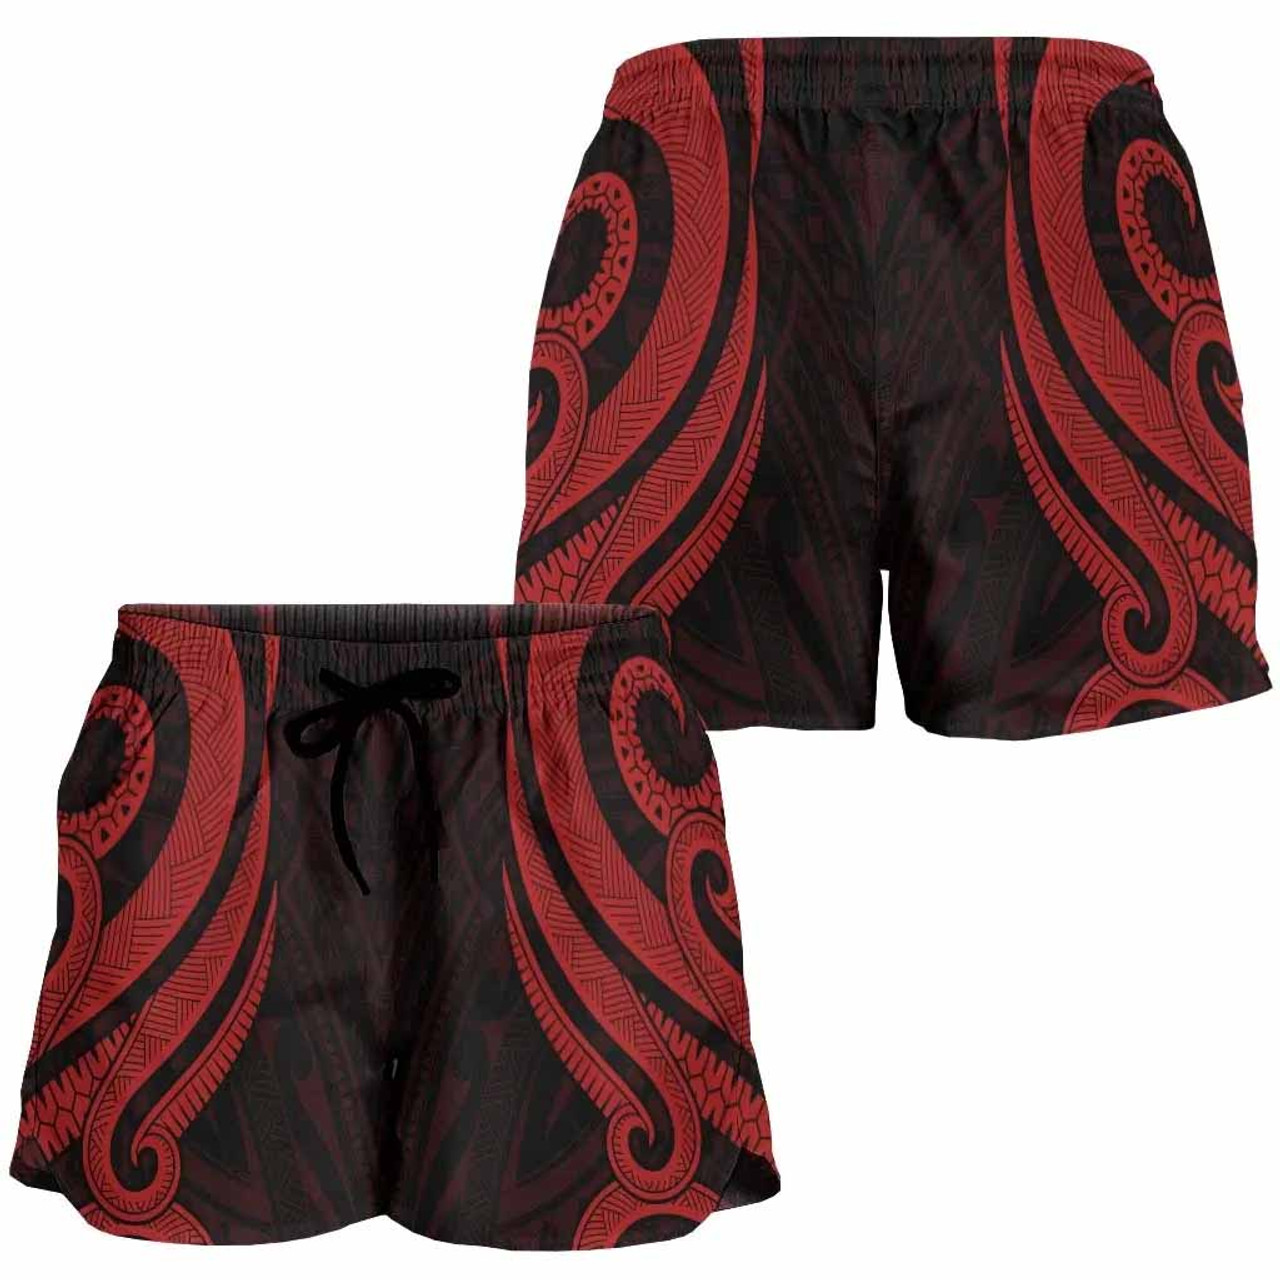 Papua New Guinea Women Shorts - Red Tentacle Turtle 3